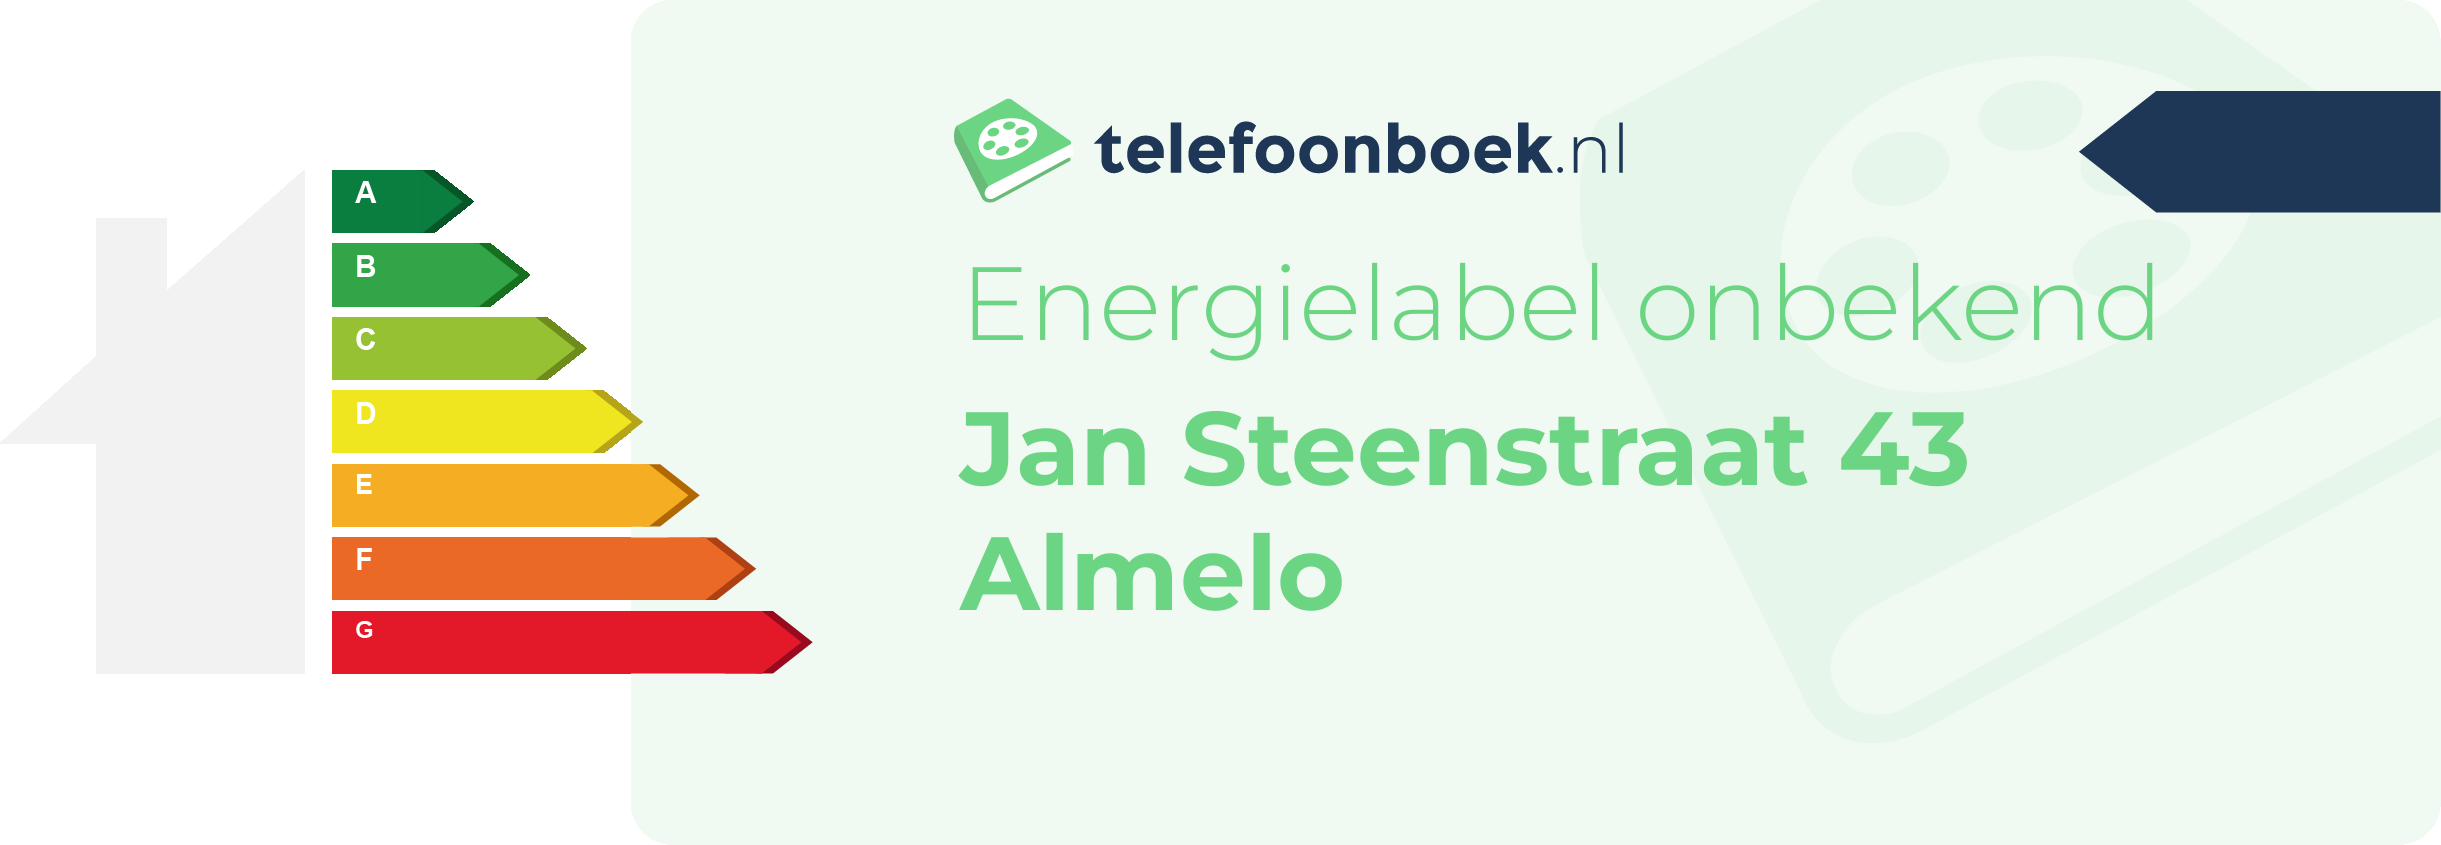 Energielabel Jan Steenstraat 43 Almelo